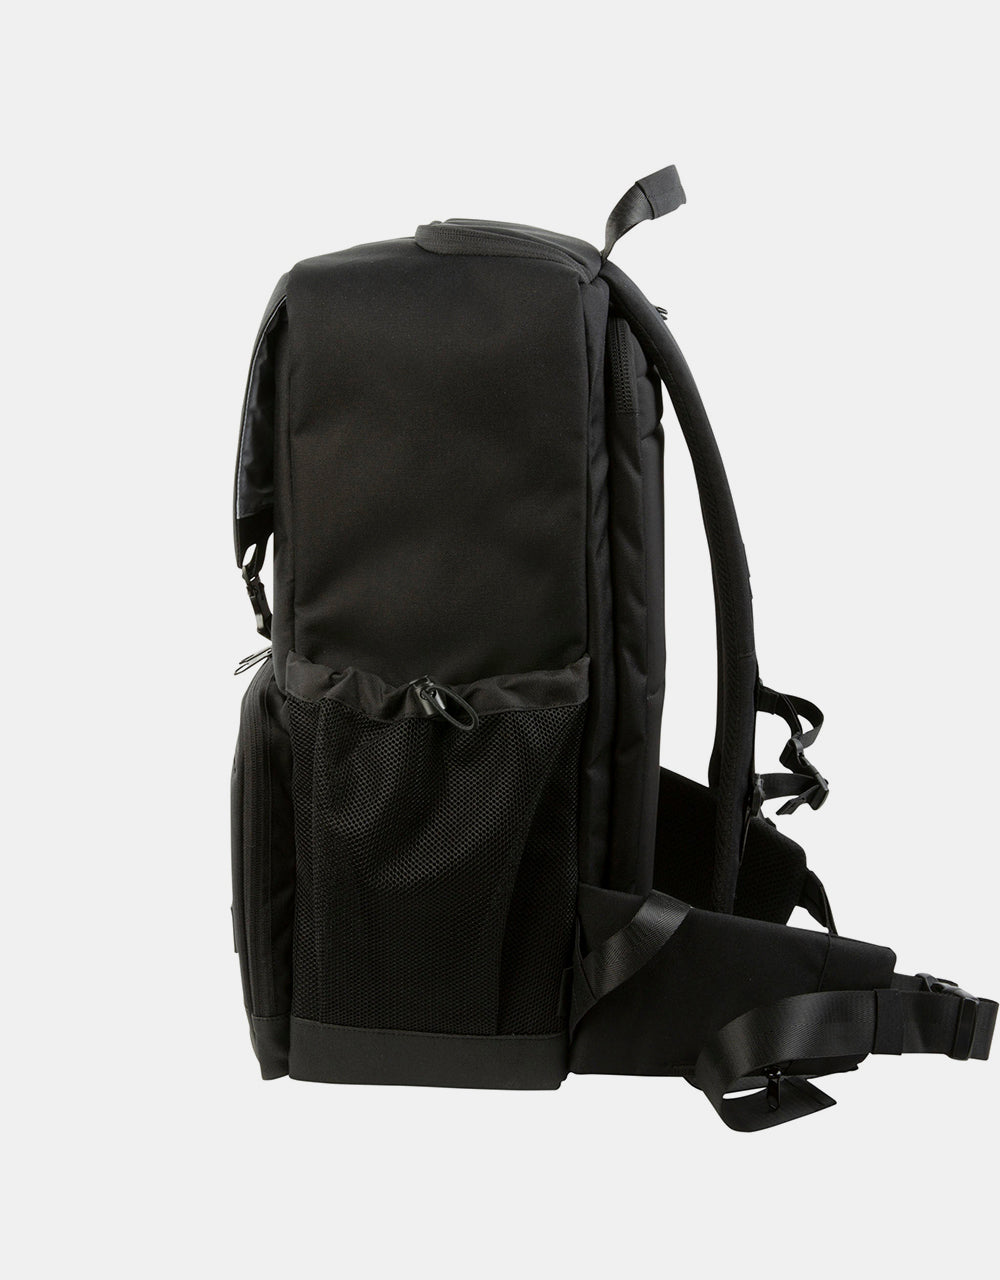 HEX Cinema Camera Backpack - Black